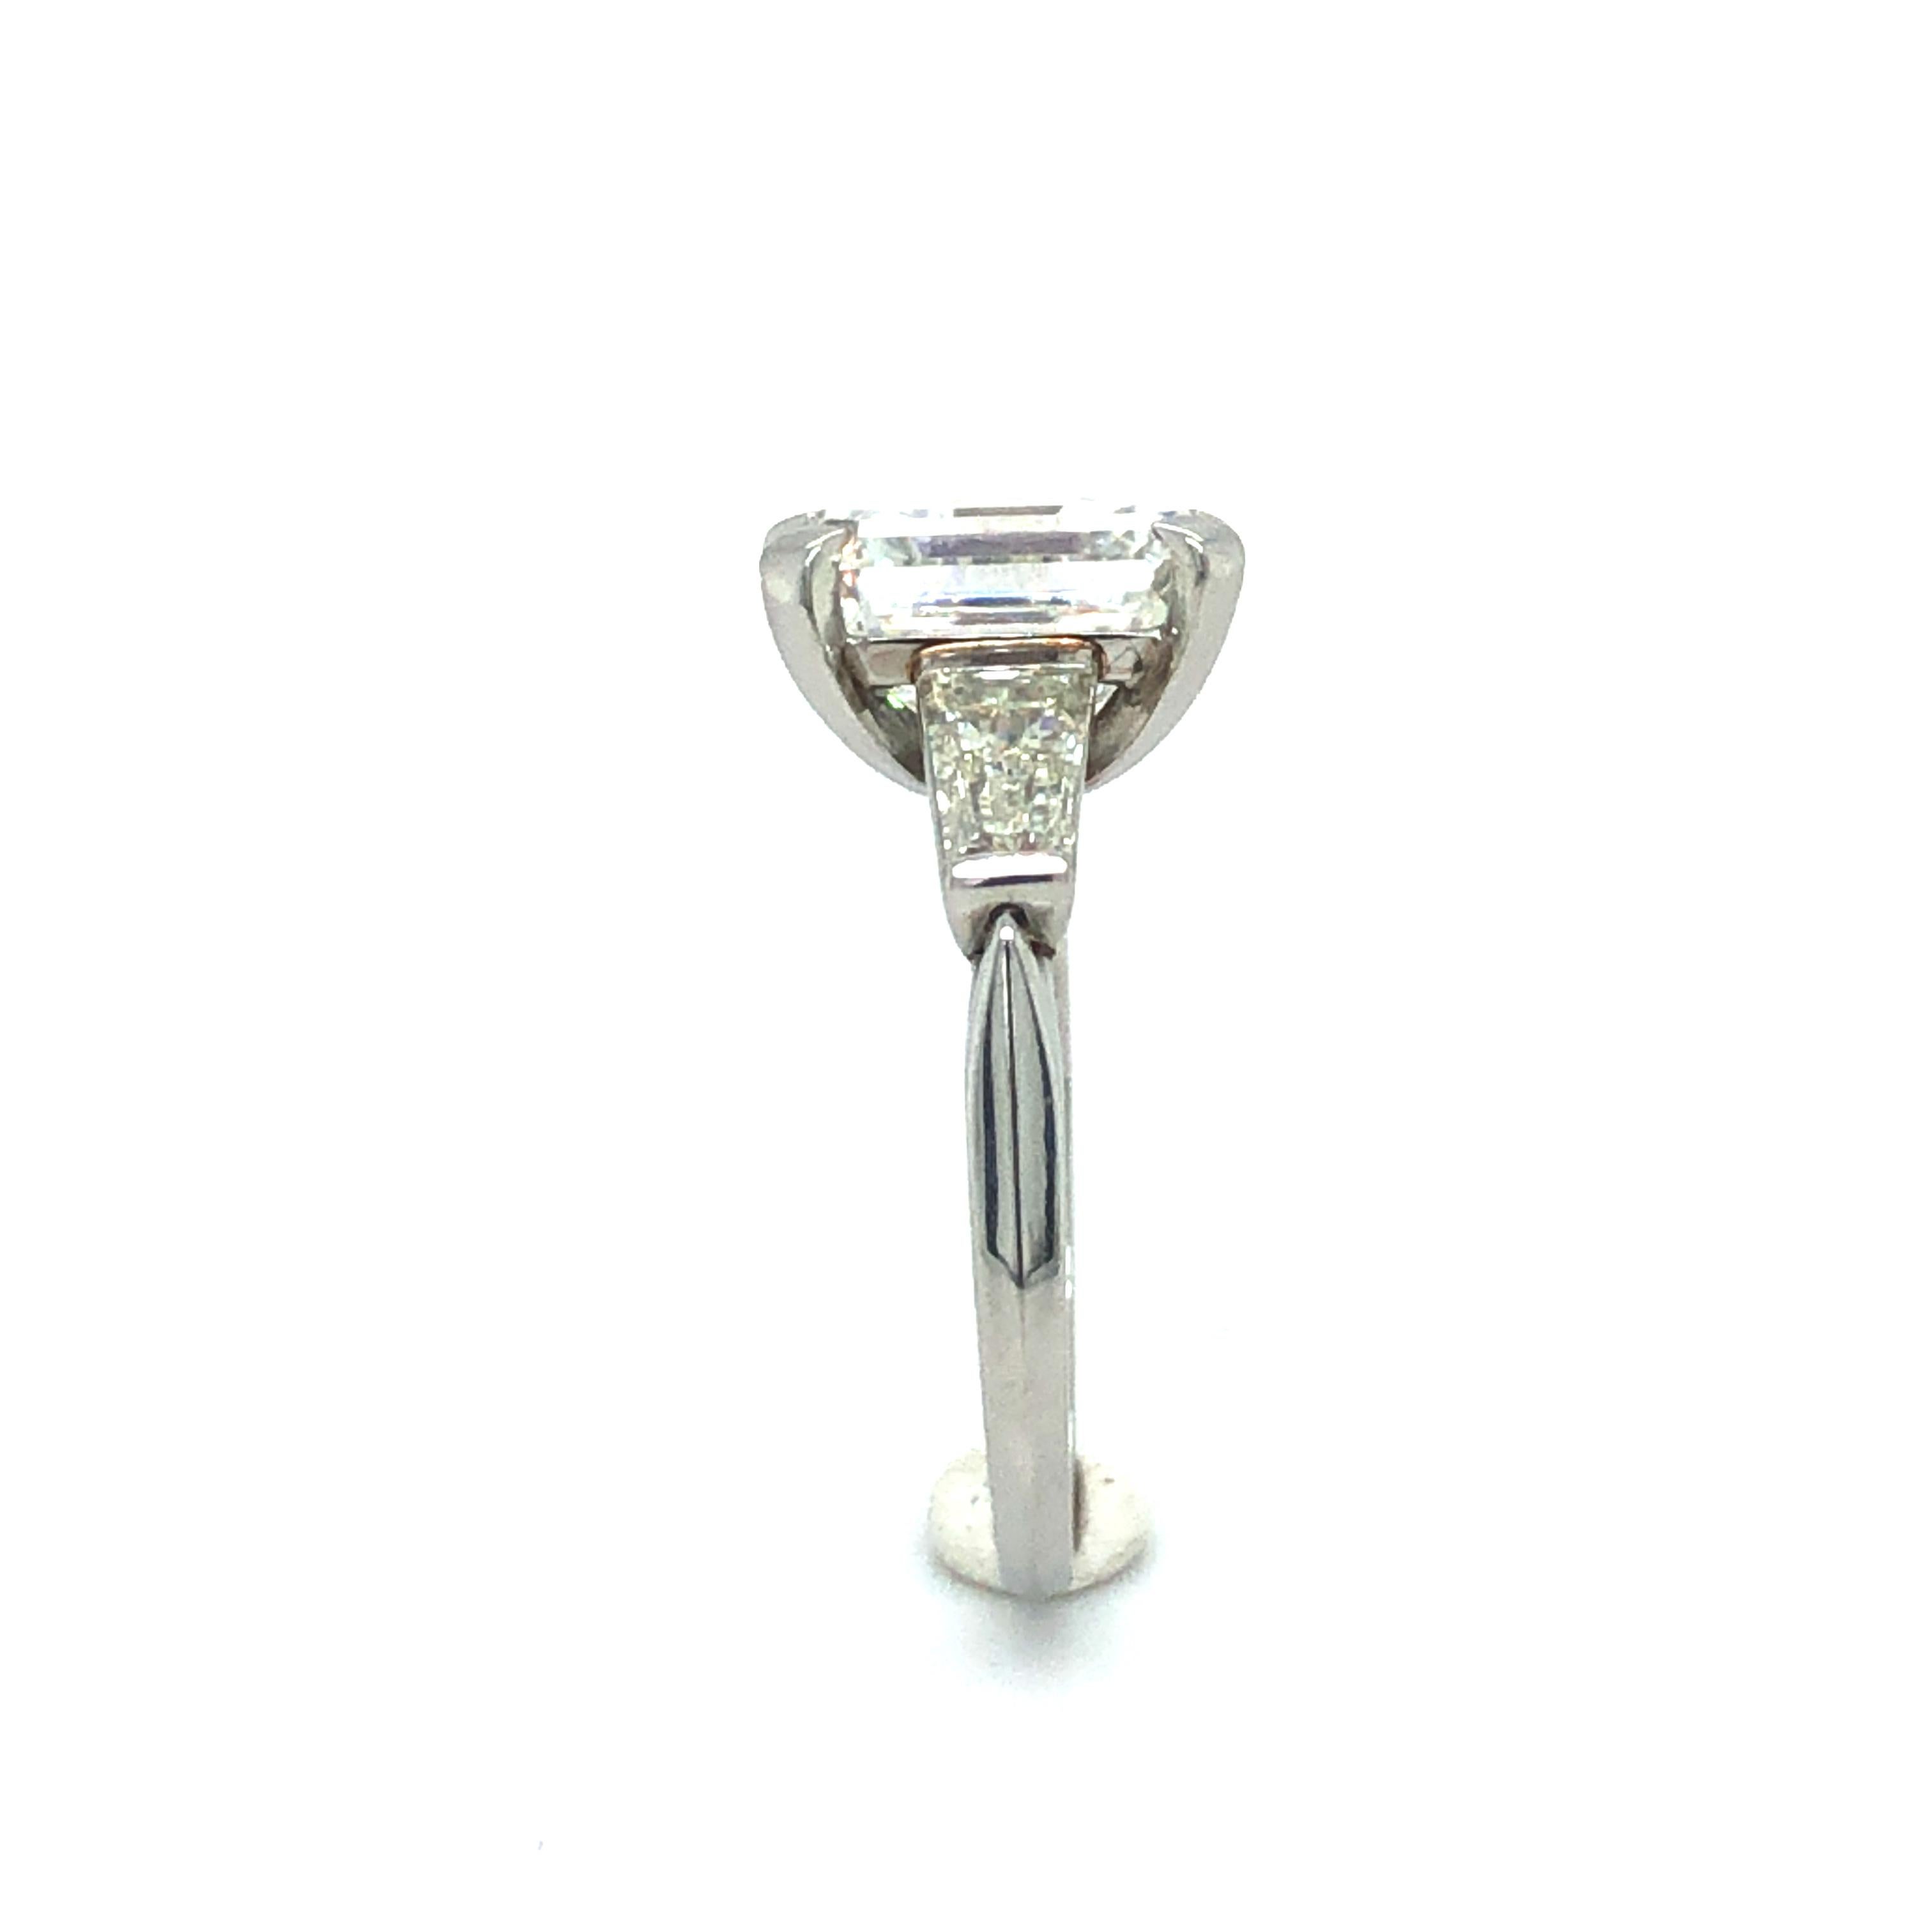 GIA Certified 4.19 Carat Emerald Cut Diamond Ring in Platinum 950 1